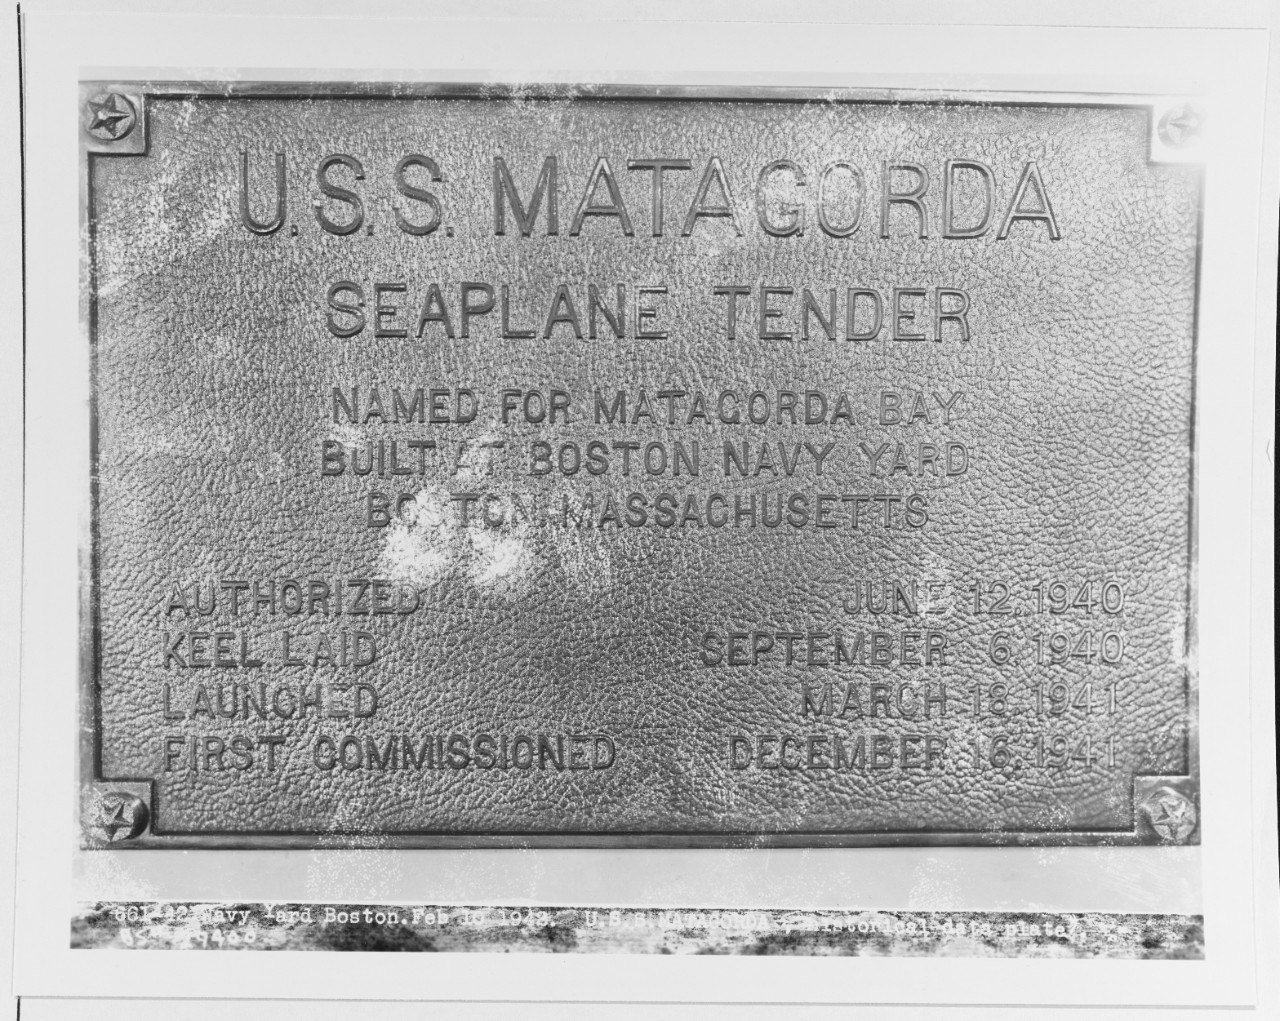 USS MATAGORDA (AVP-22)